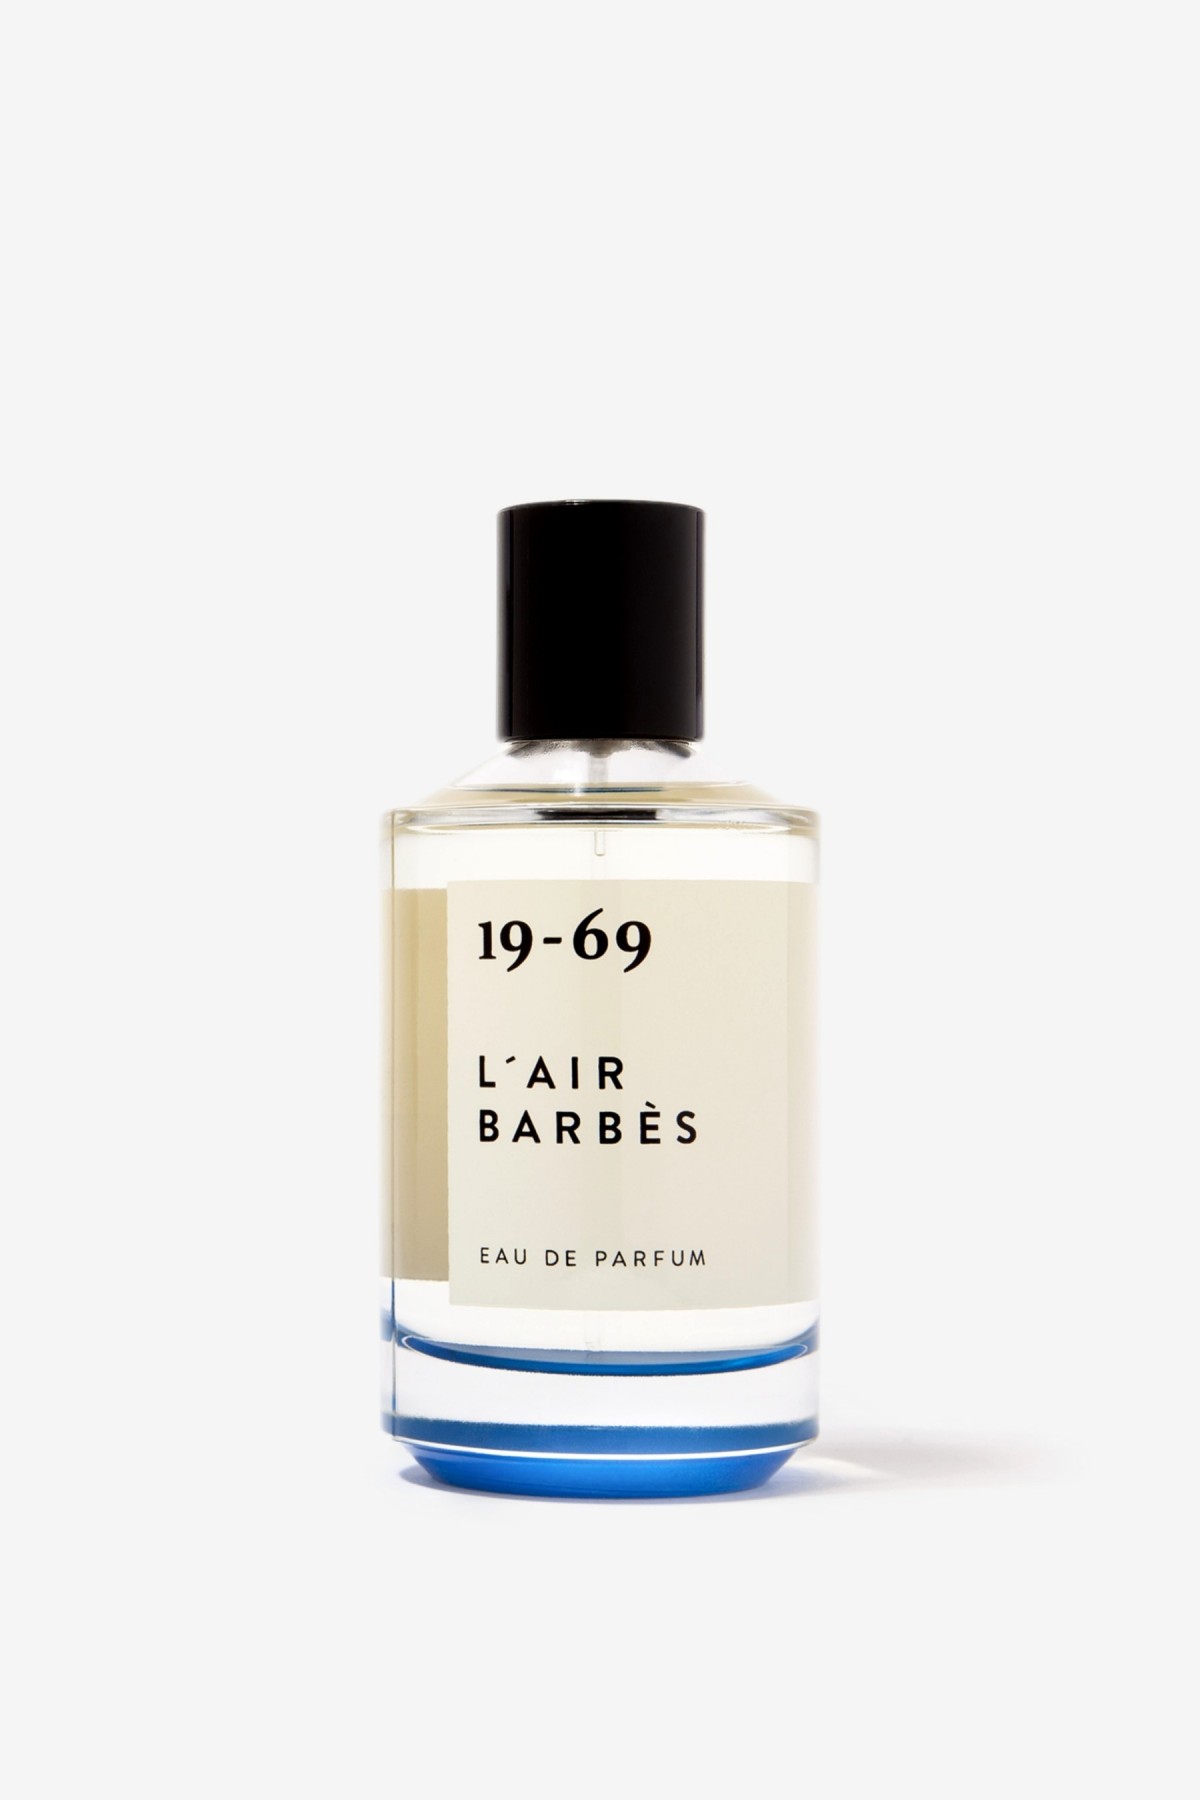 19-69 L'air Barbès Eau de Parfum in 50ml